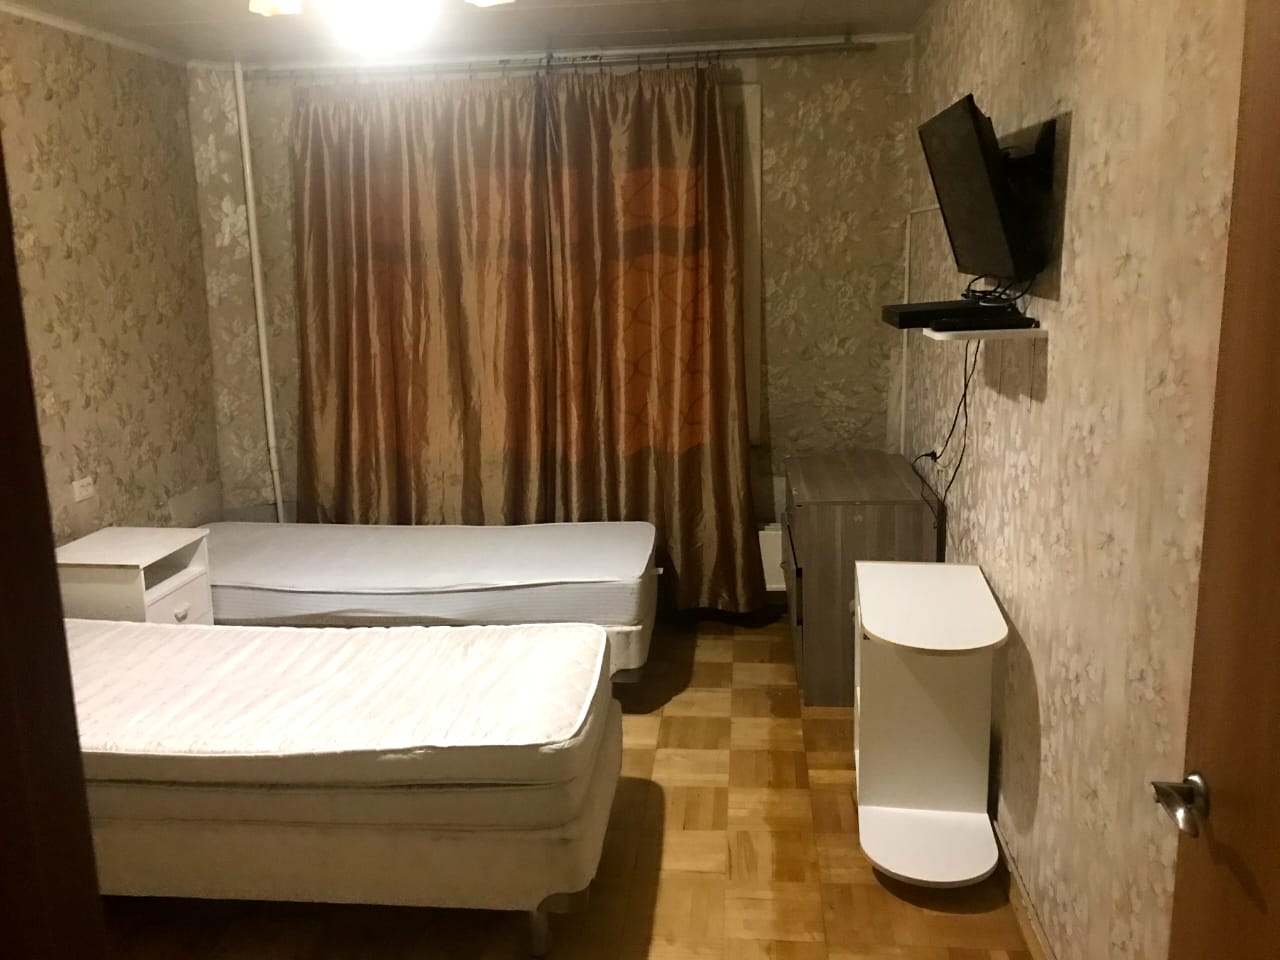 Двухкомнатная квартира на улице Машинцева в Химках. Телевизор